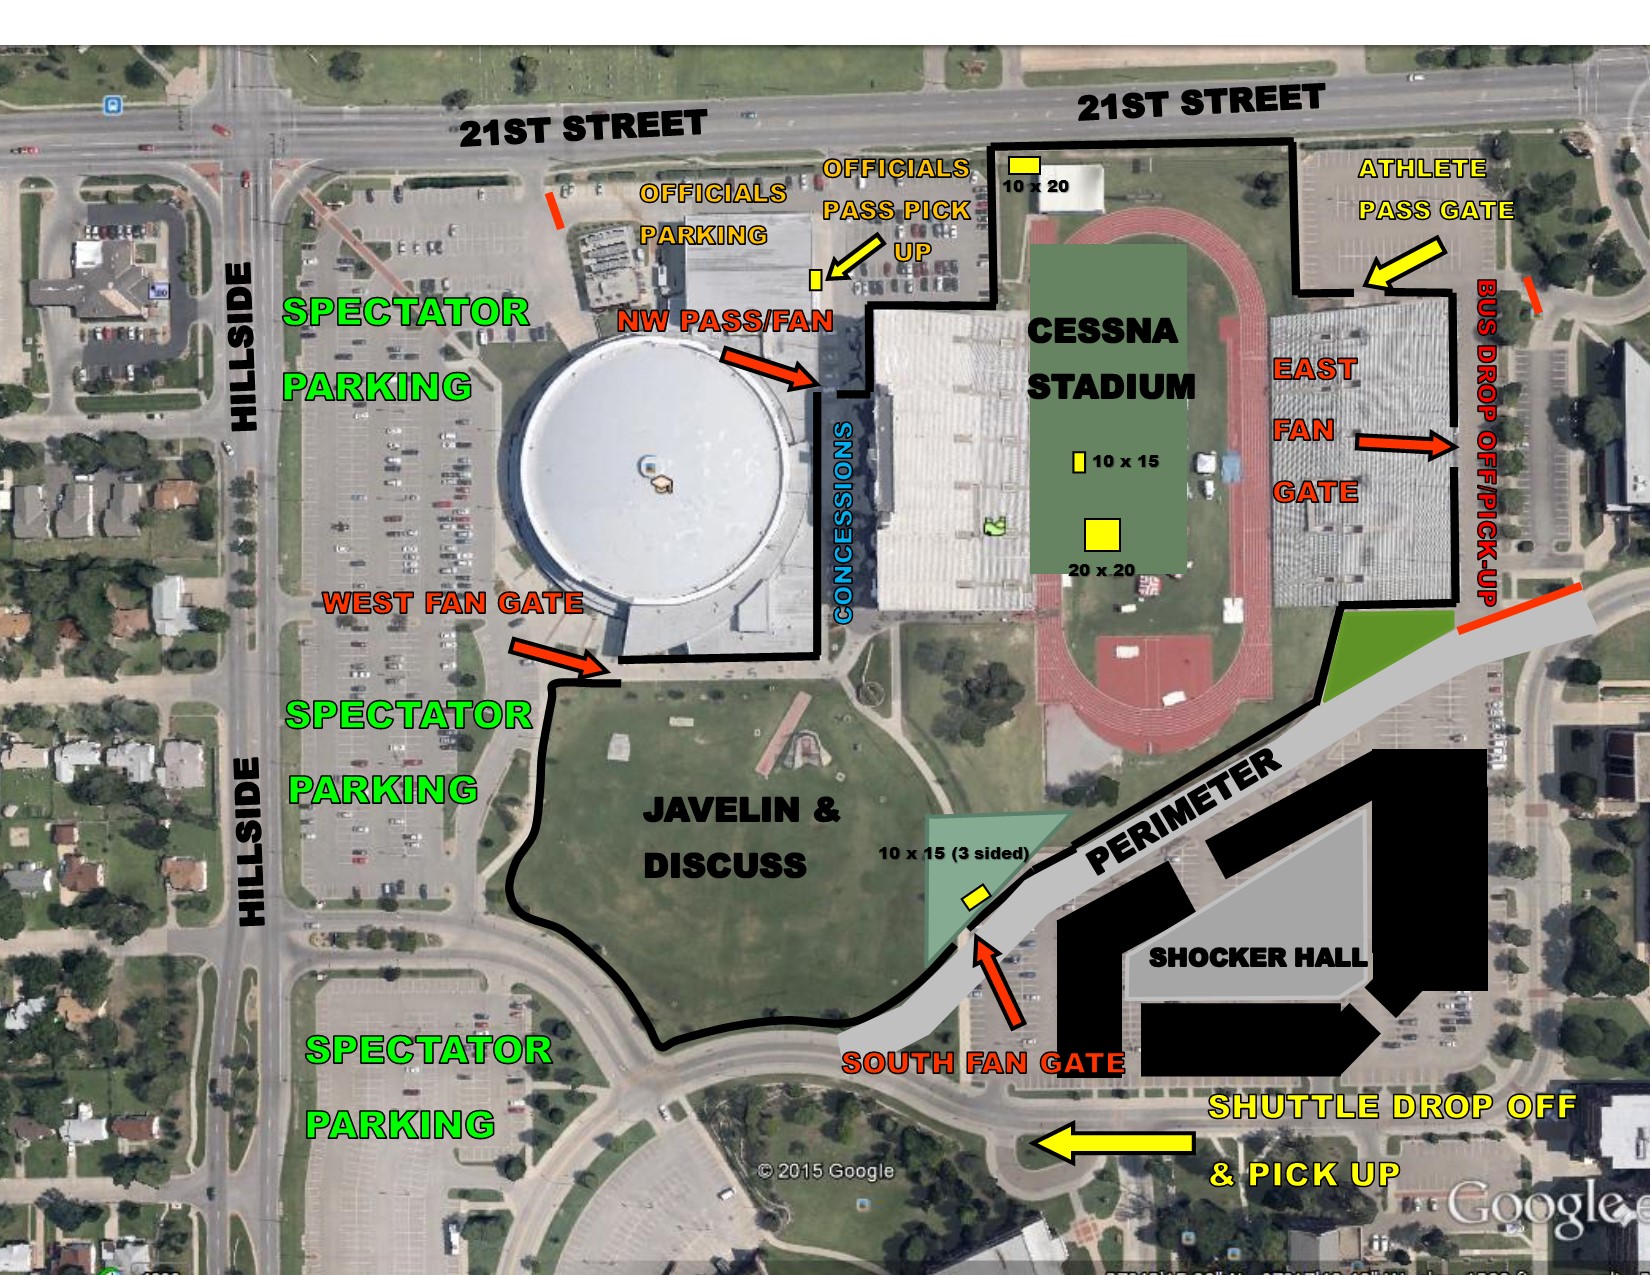 Cessna Stadium Facility map and Ticket Gates